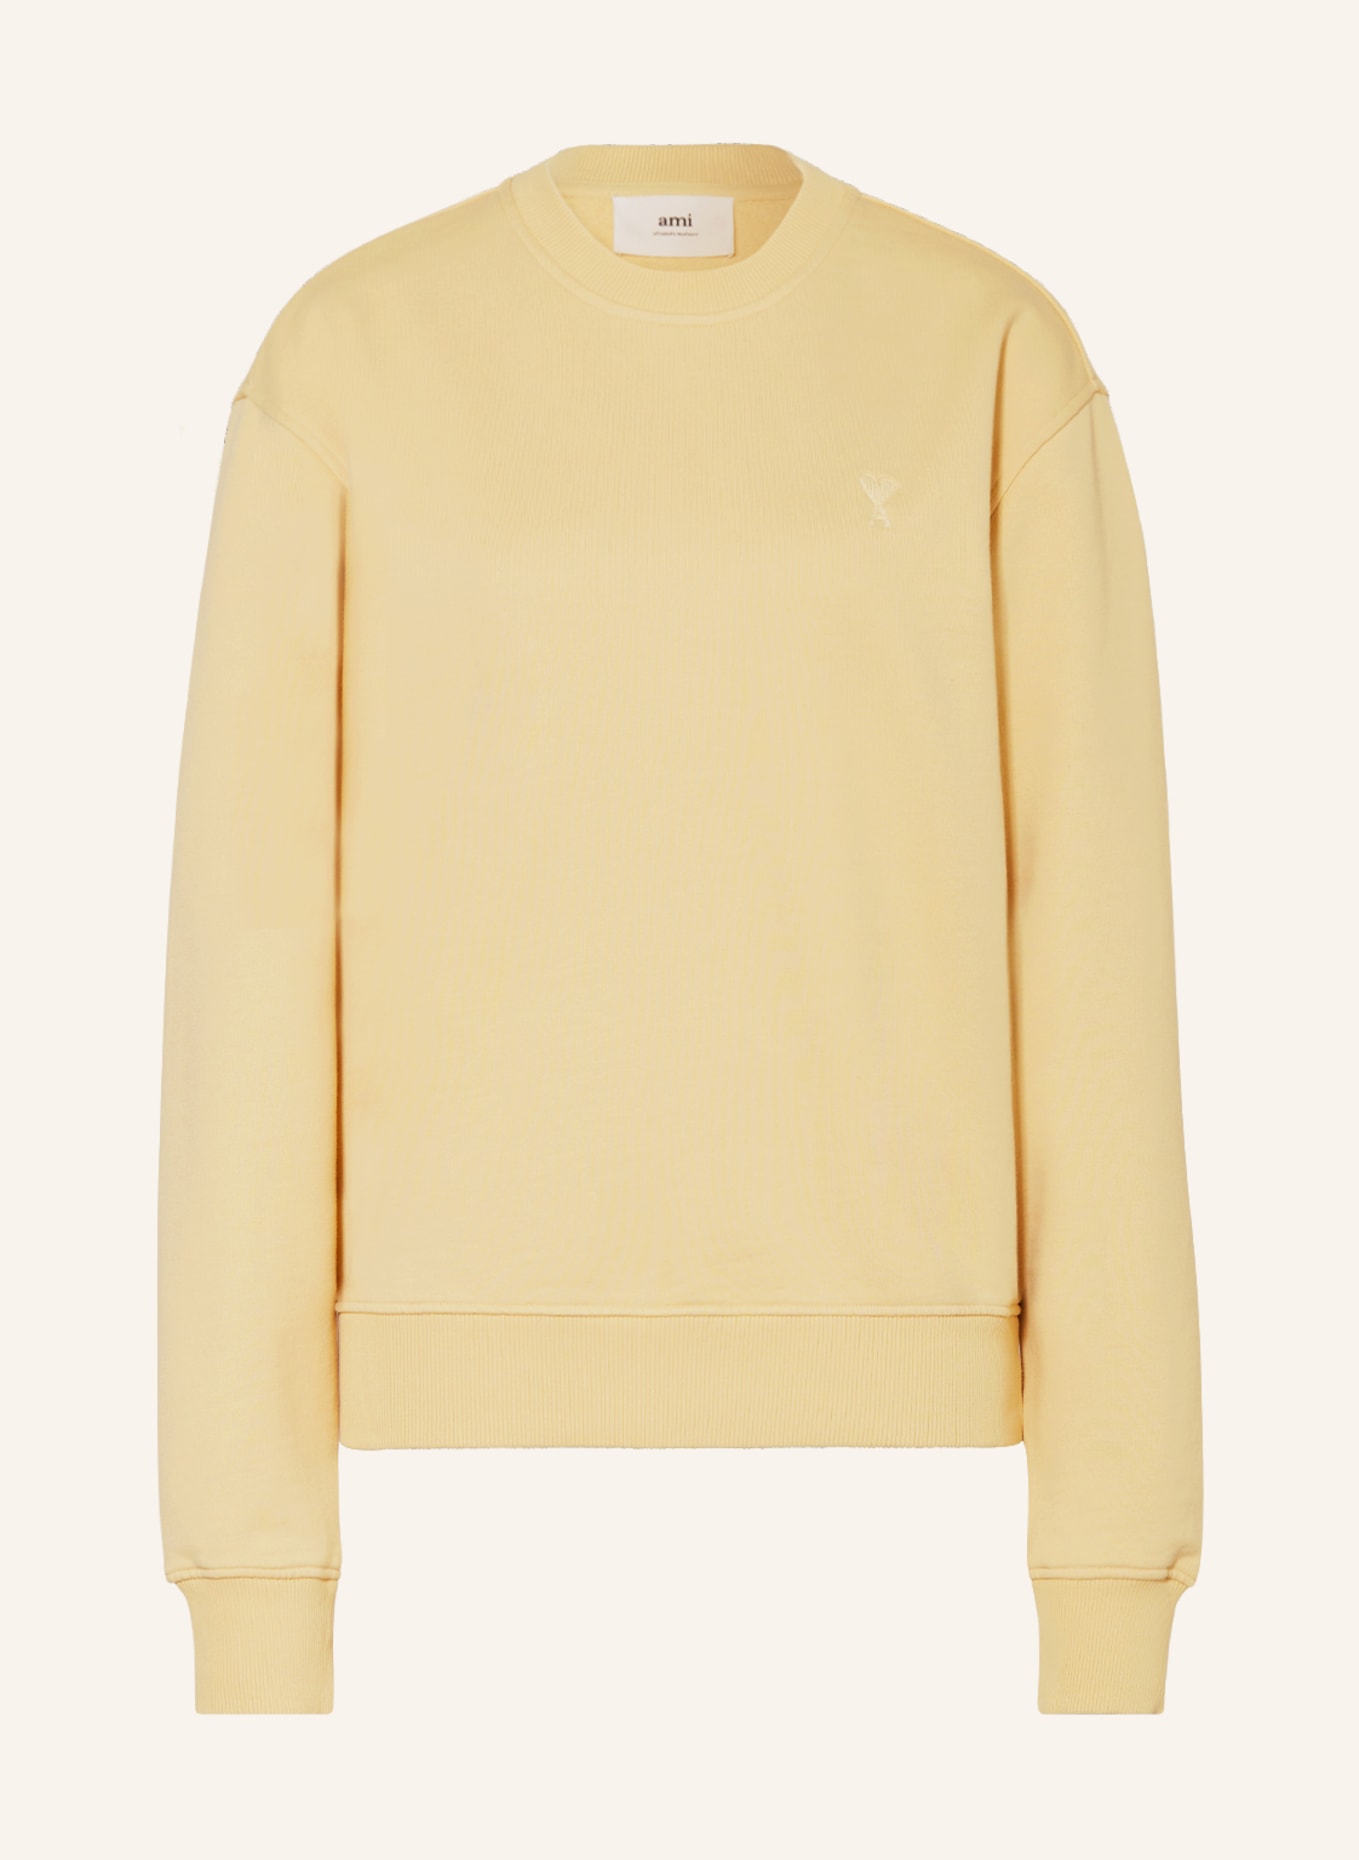 AMI PARIS Sweatshirt, Farbe: HELLGELB (Bild 1)